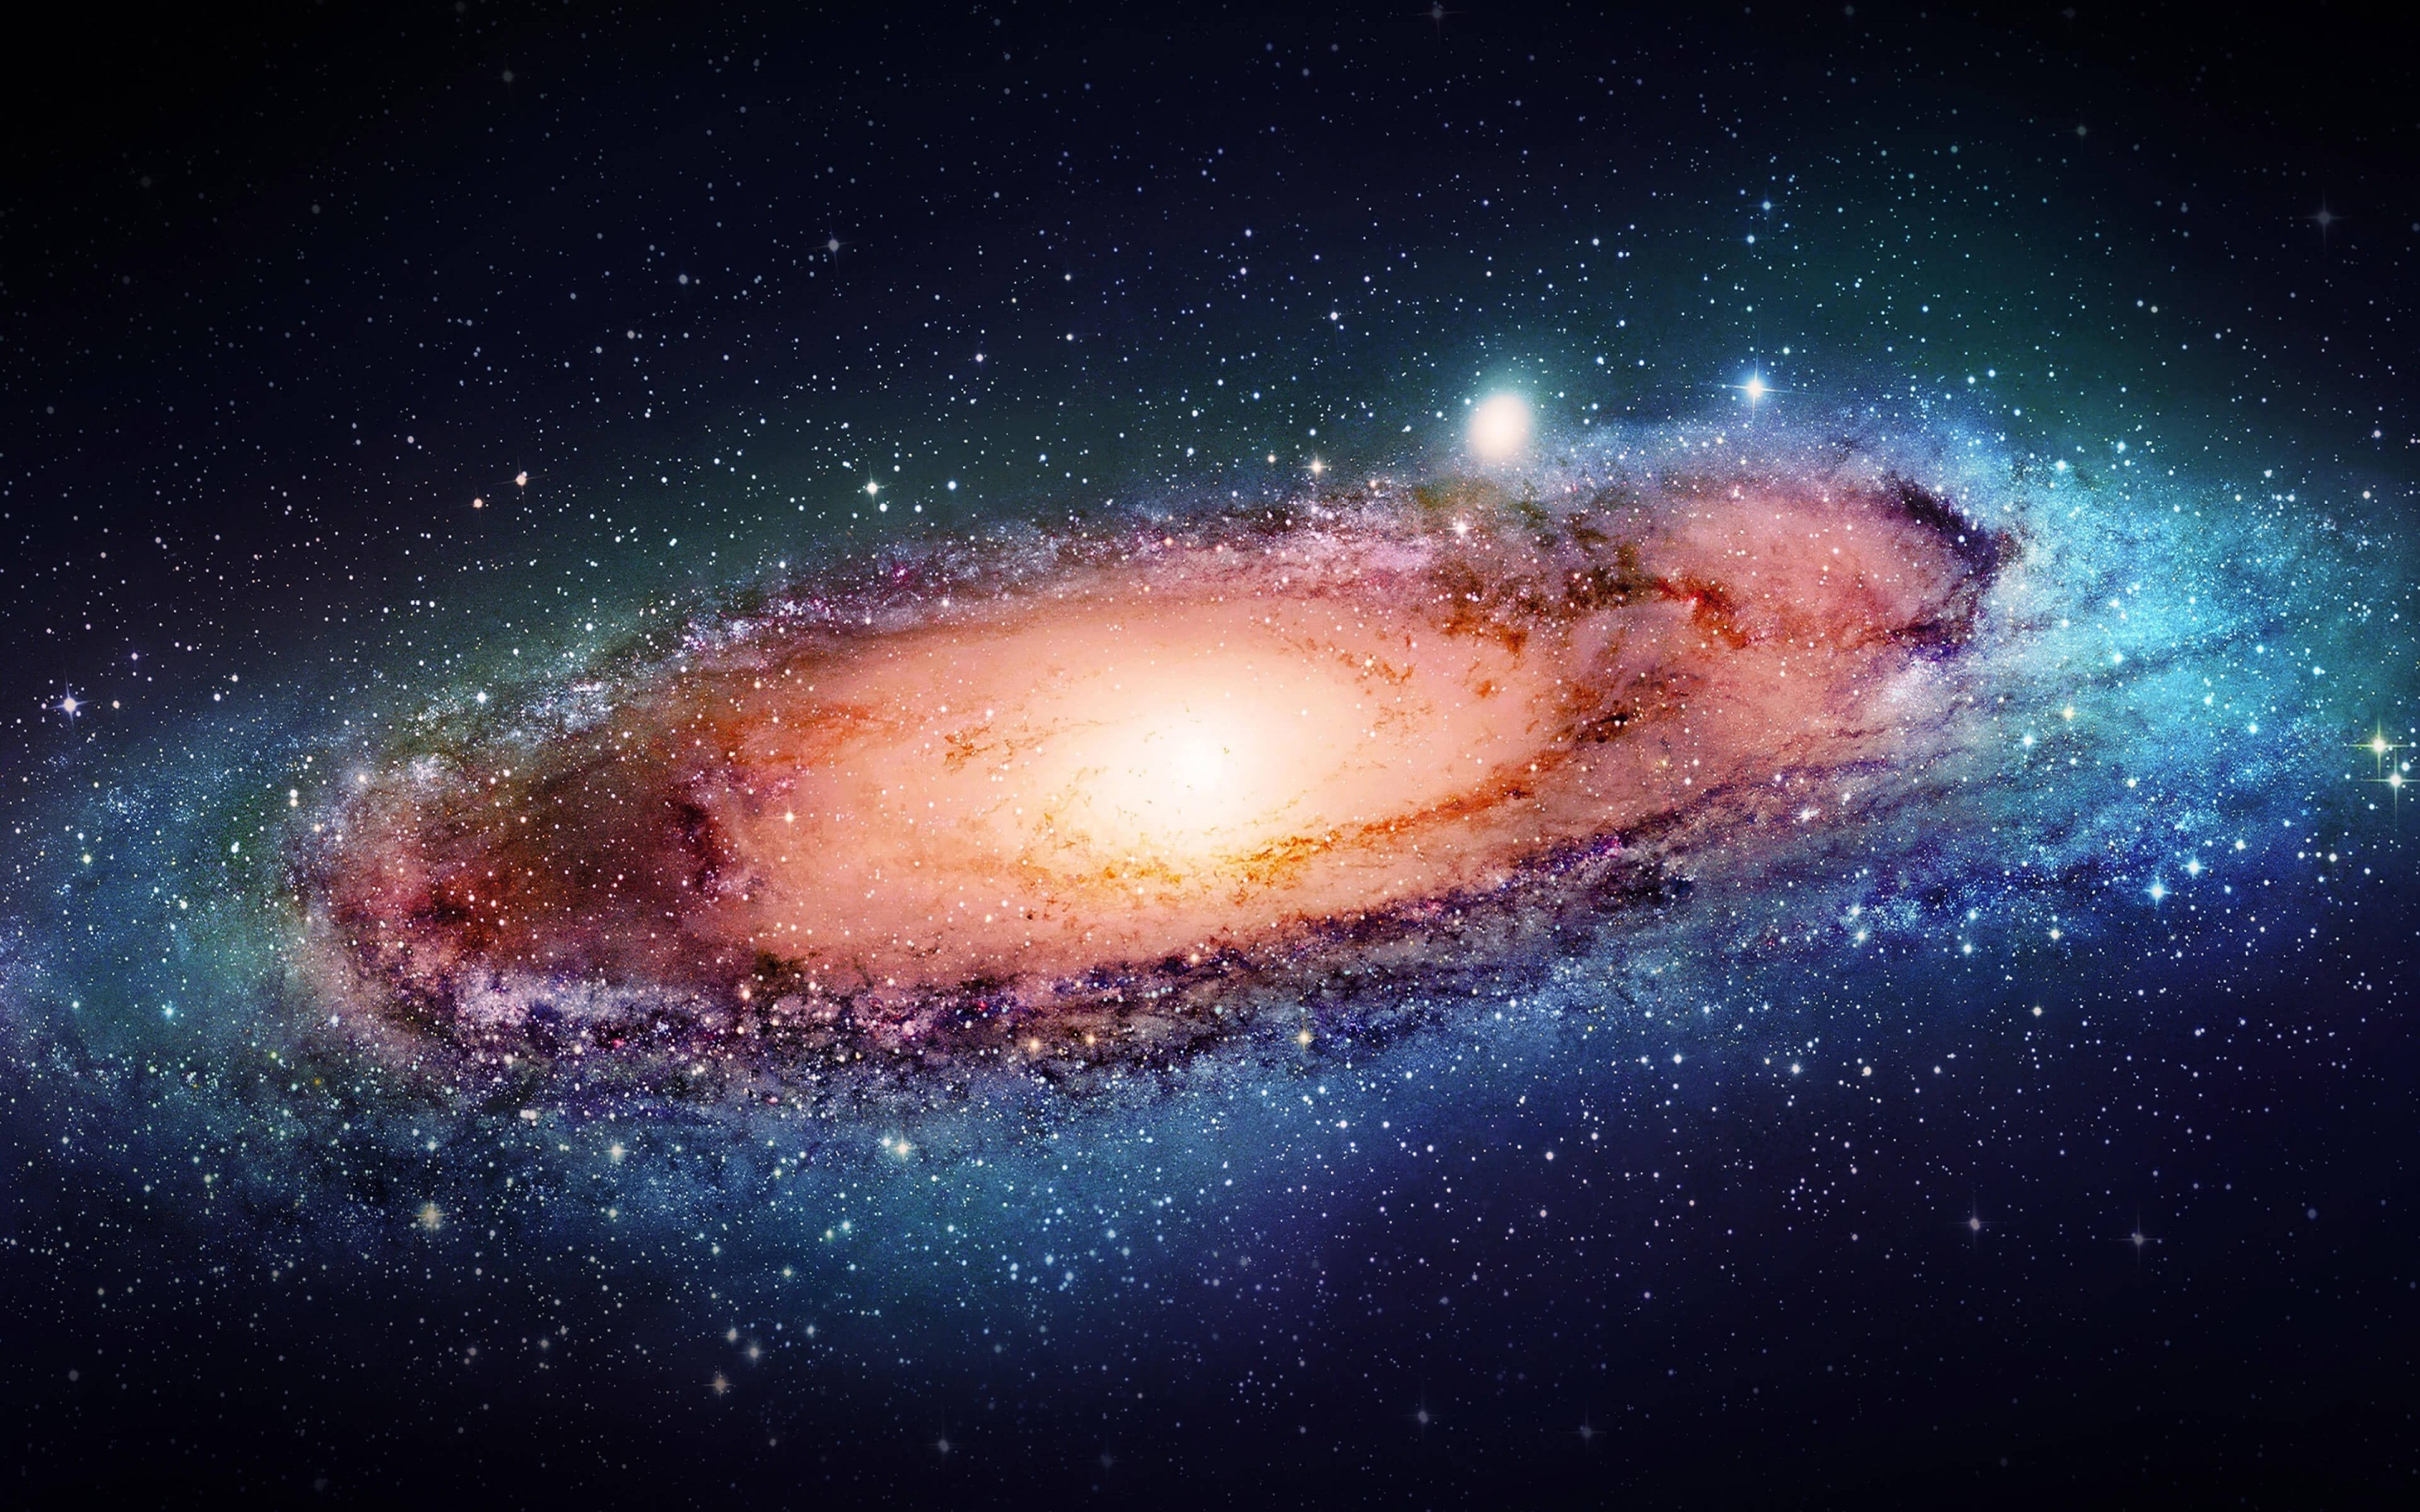 Milky Way Galaxy for 2880 x 1800 Retina Display resolution